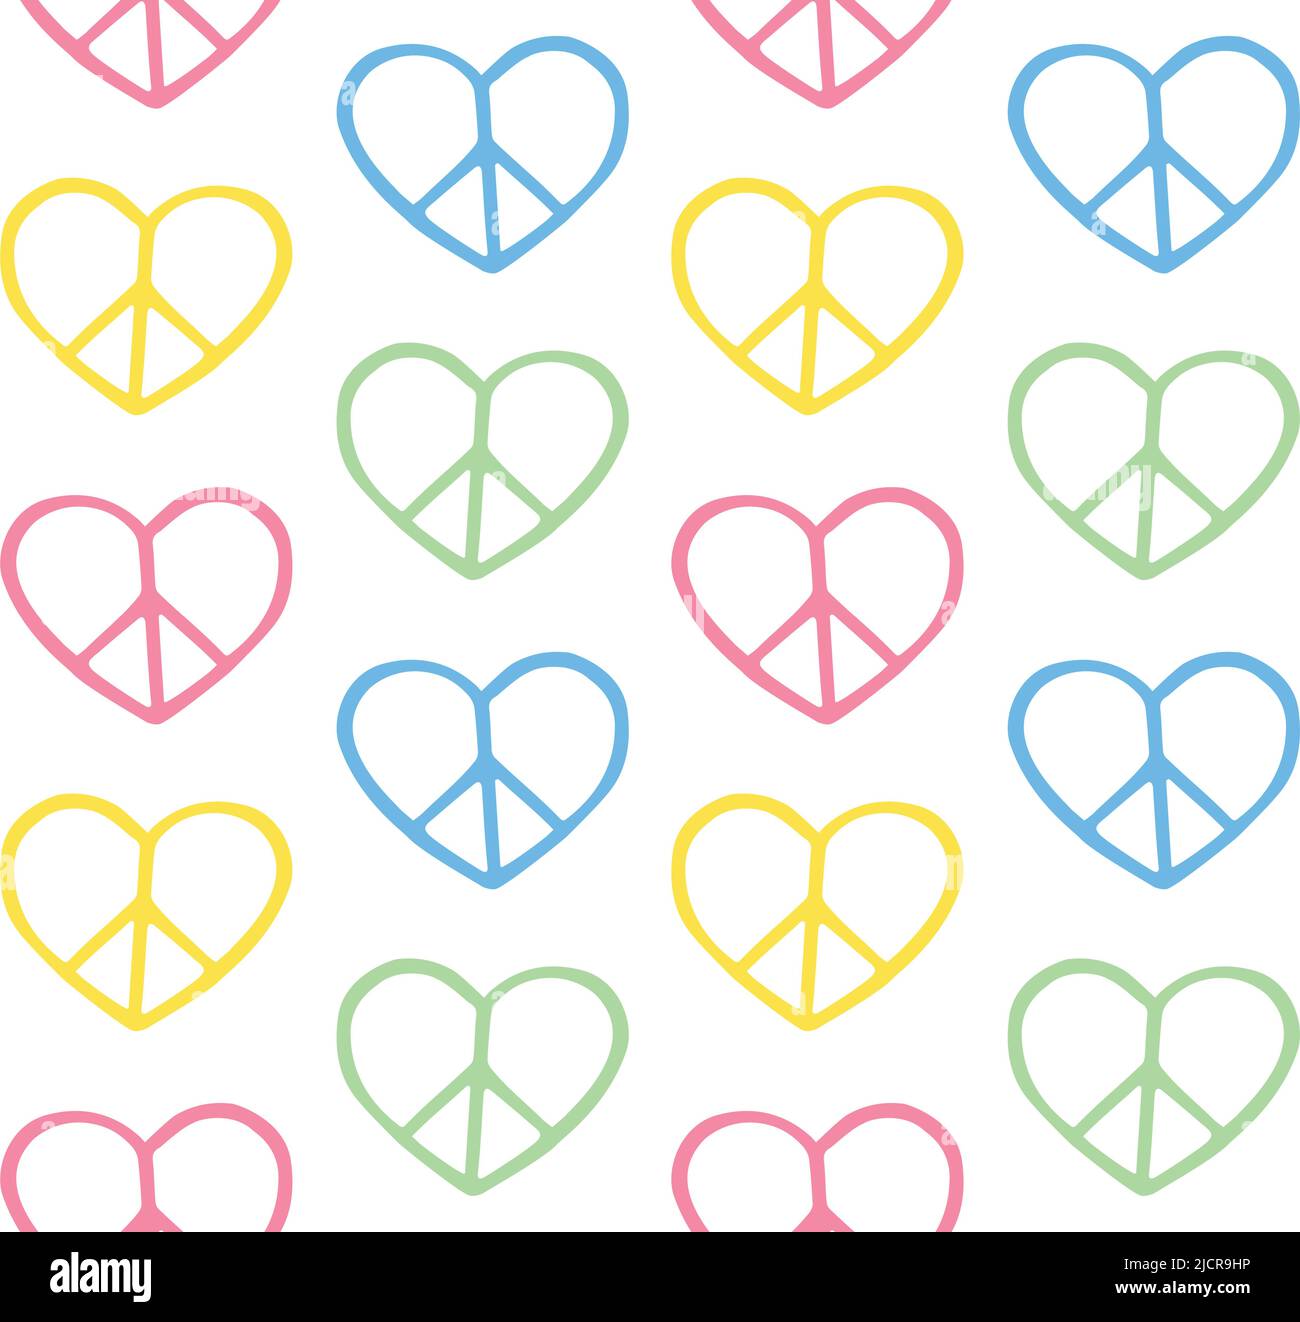 Heart Peace Sign Wallpaper